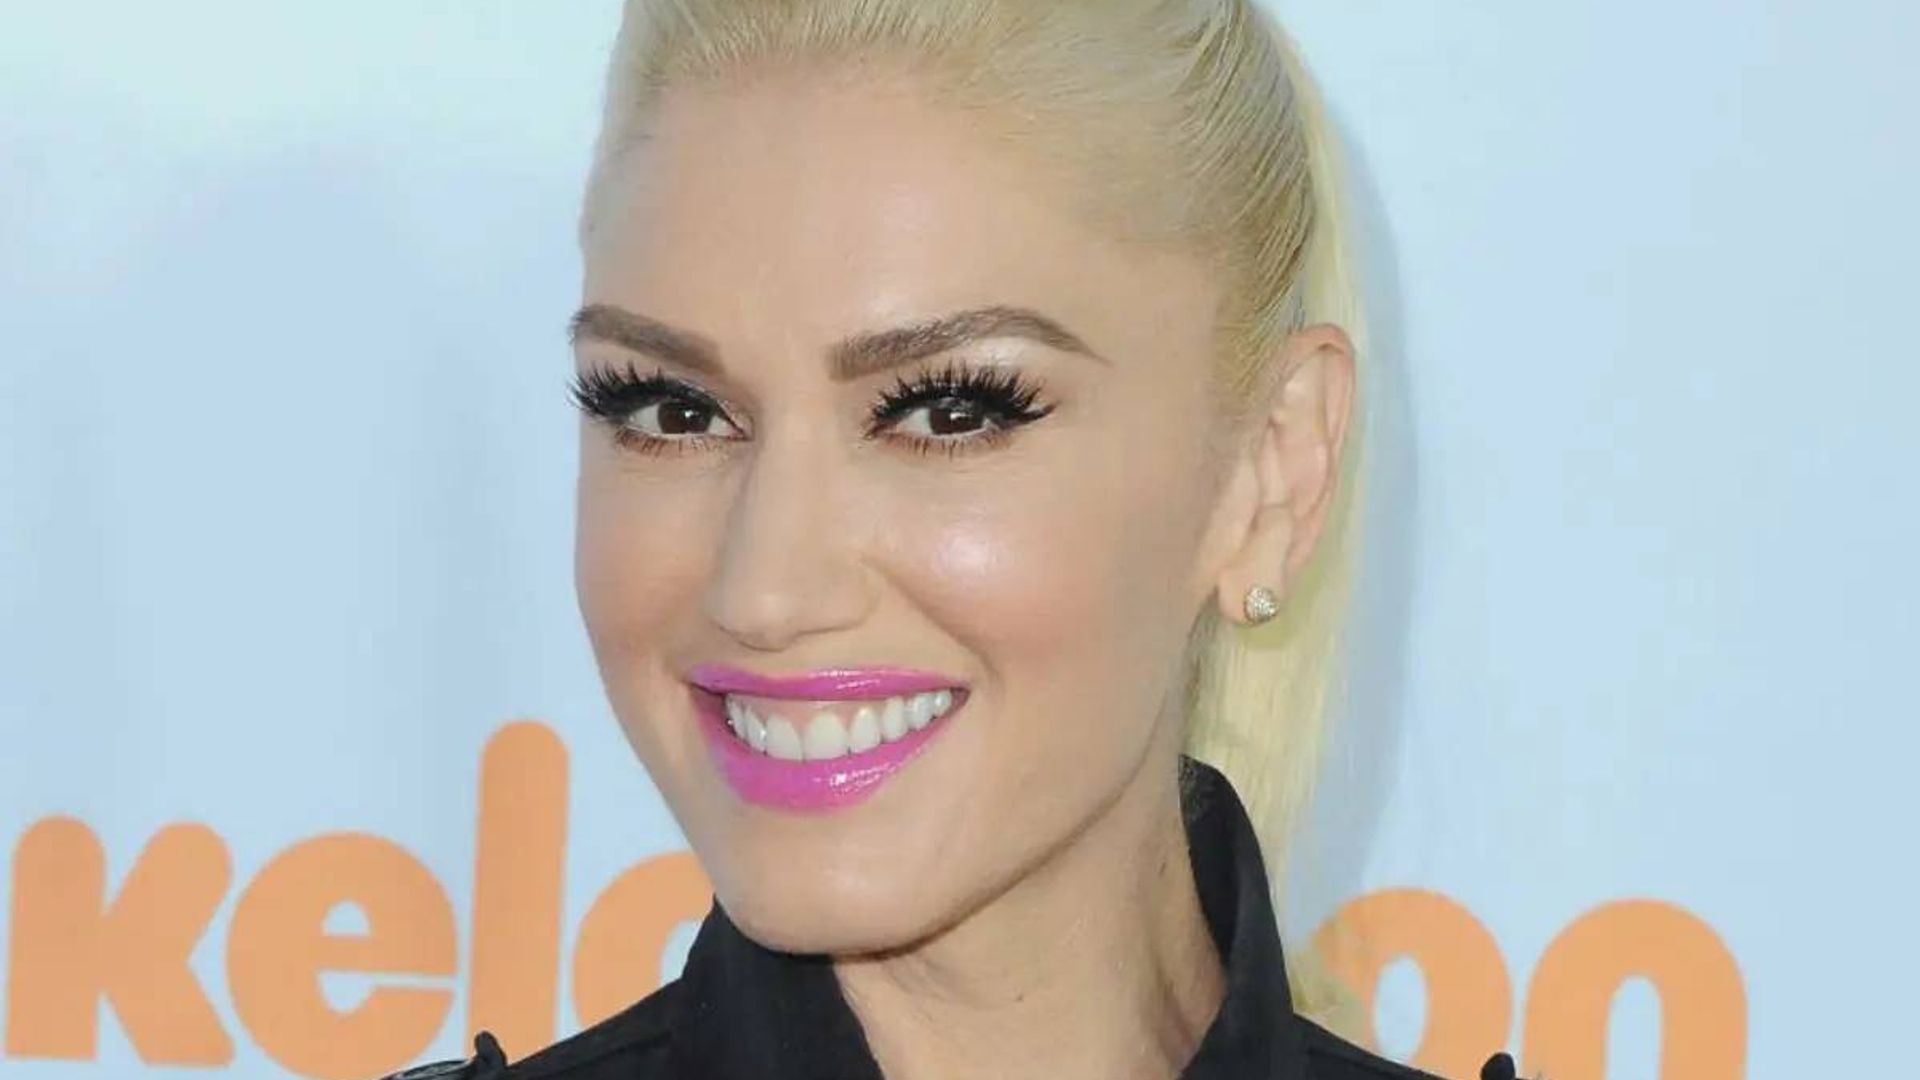 Gwen Stefani S Luscious Lips And Very Full Brow Get Fans Talking As She Kicks Off New Las Vegas